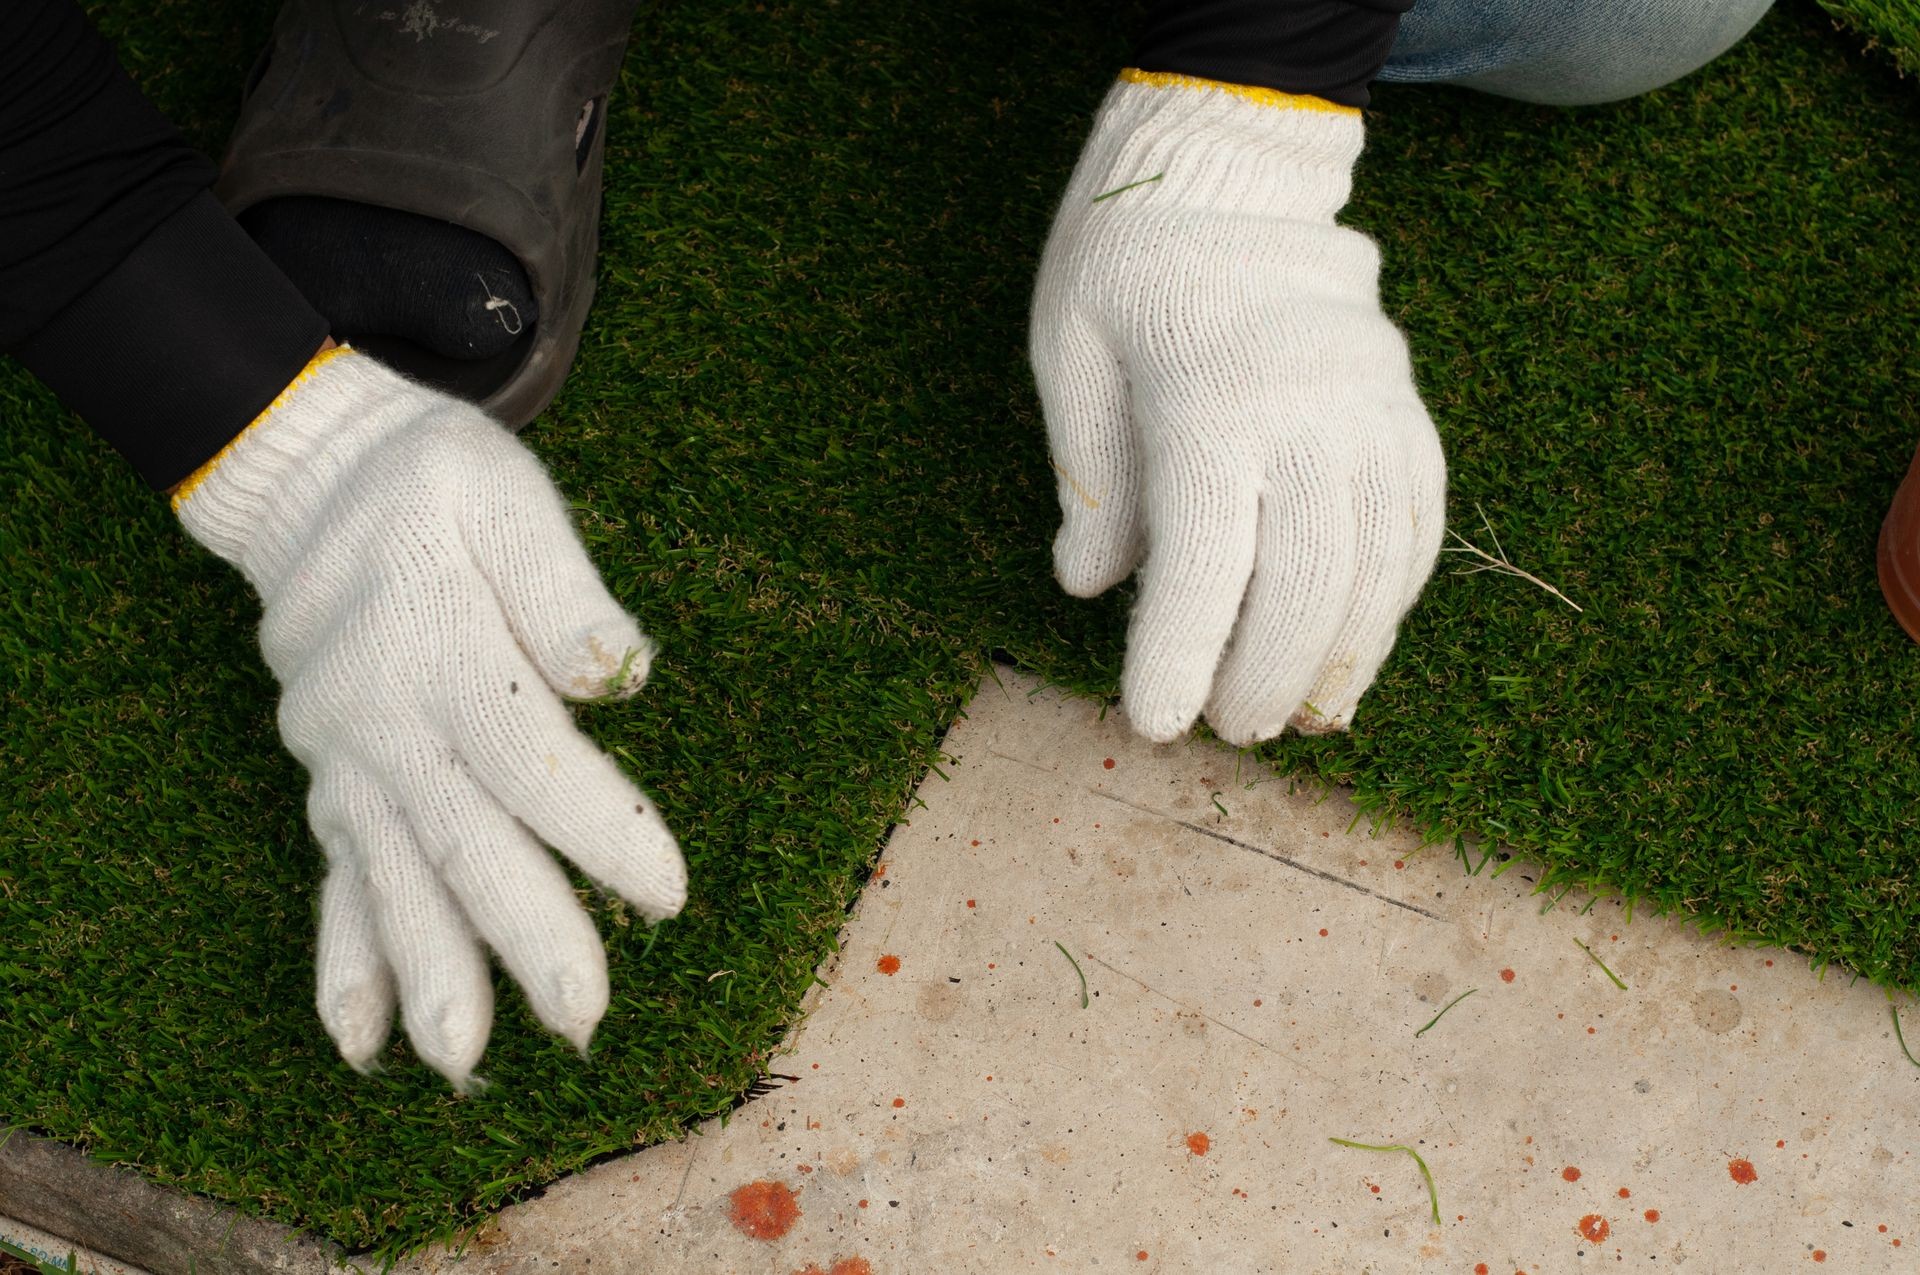 Stick with glue artificial turf grass on floor. Worker install green grass